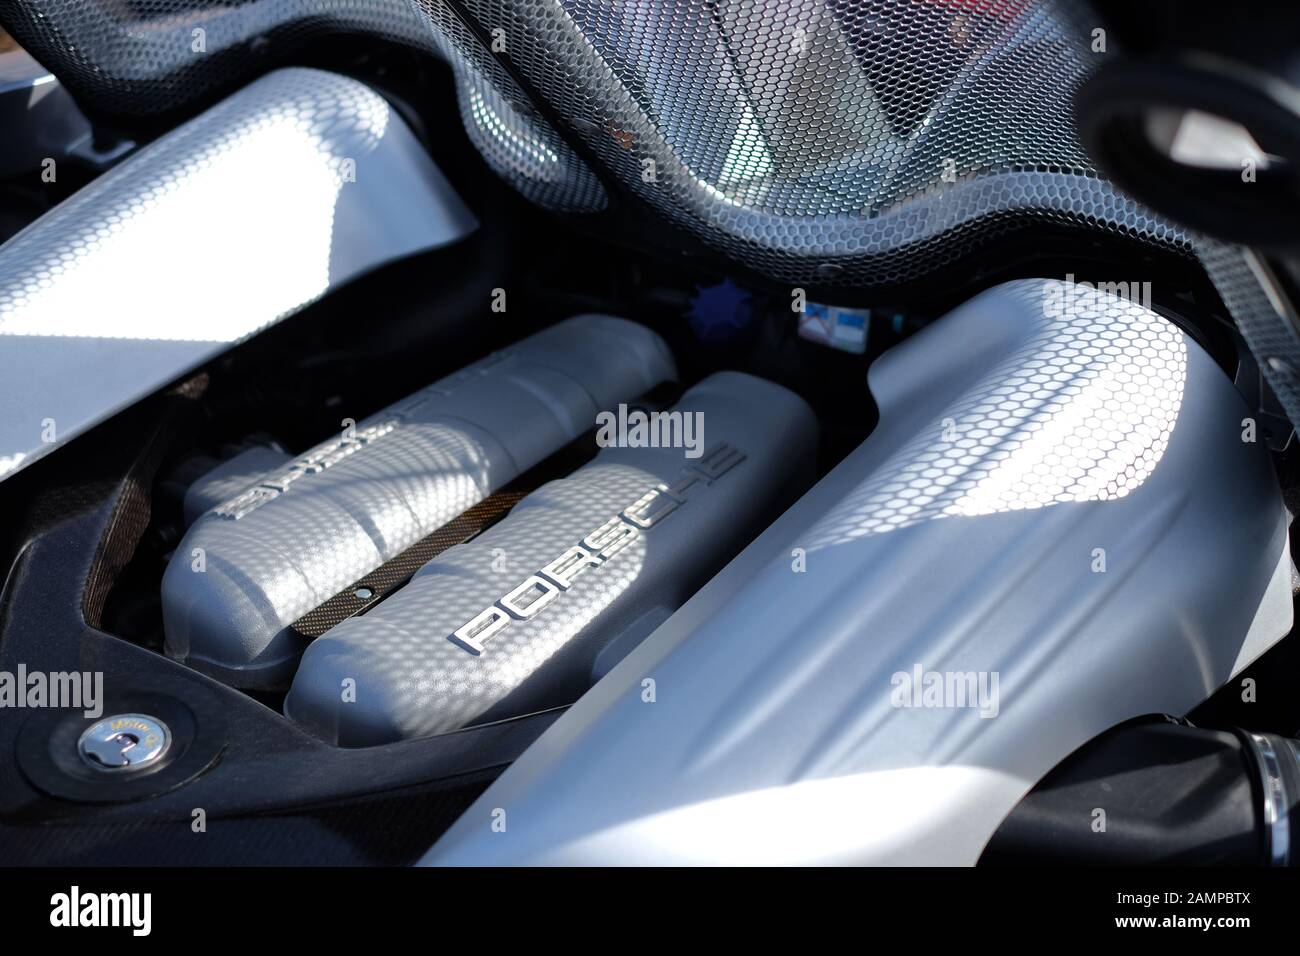 Porsche Carrera GT V10 engine Stock Photo - Alamy